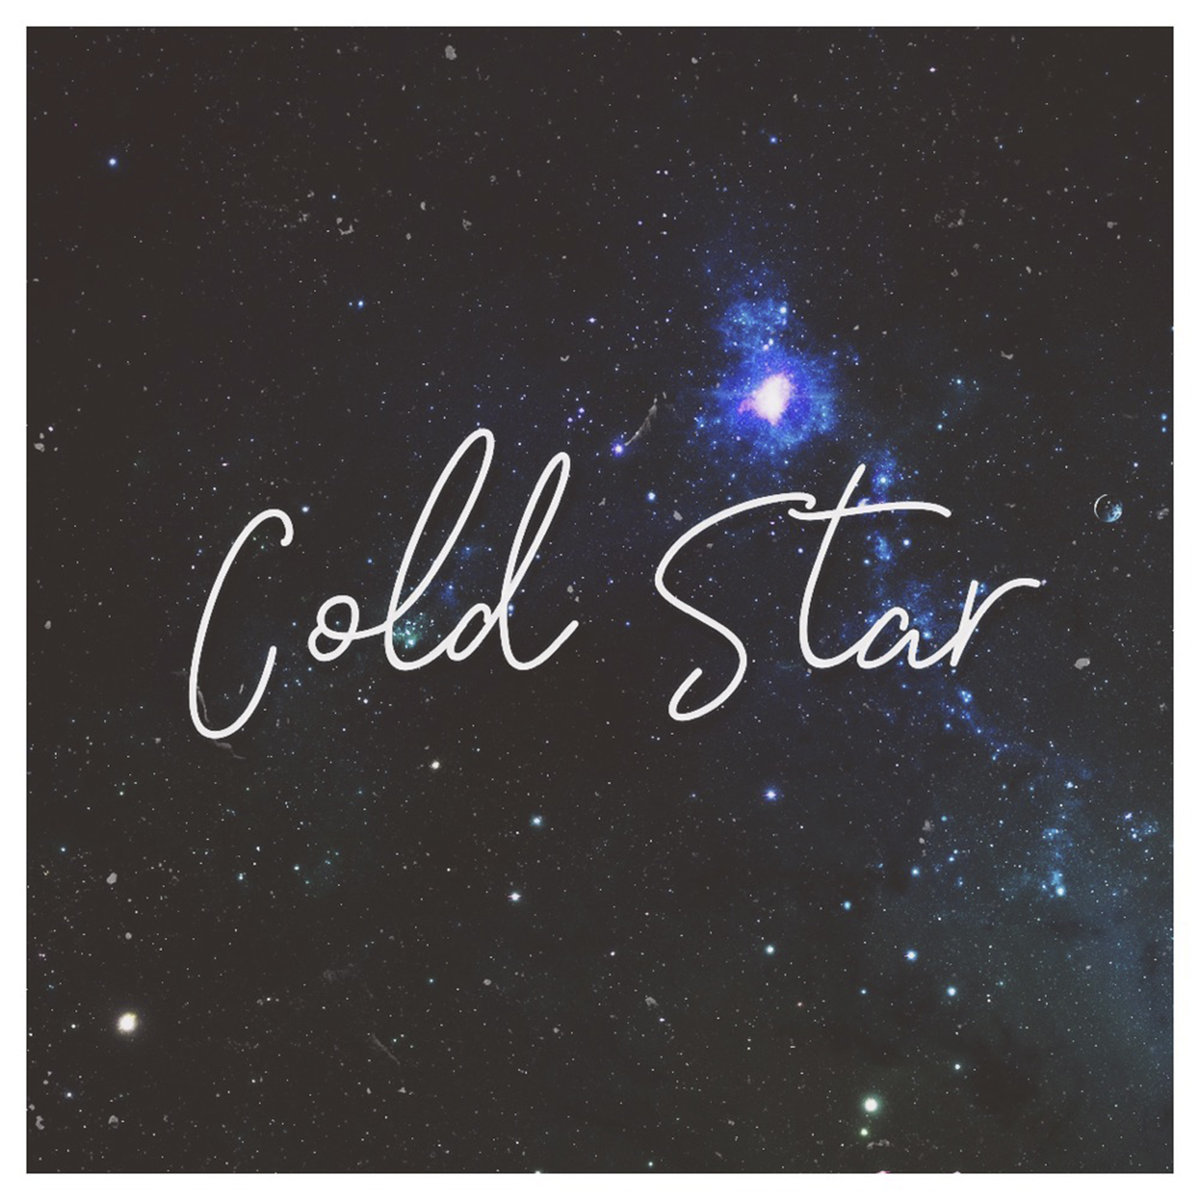 Cold star. Star Kids album. Mr Star песня. Cold Star 100.